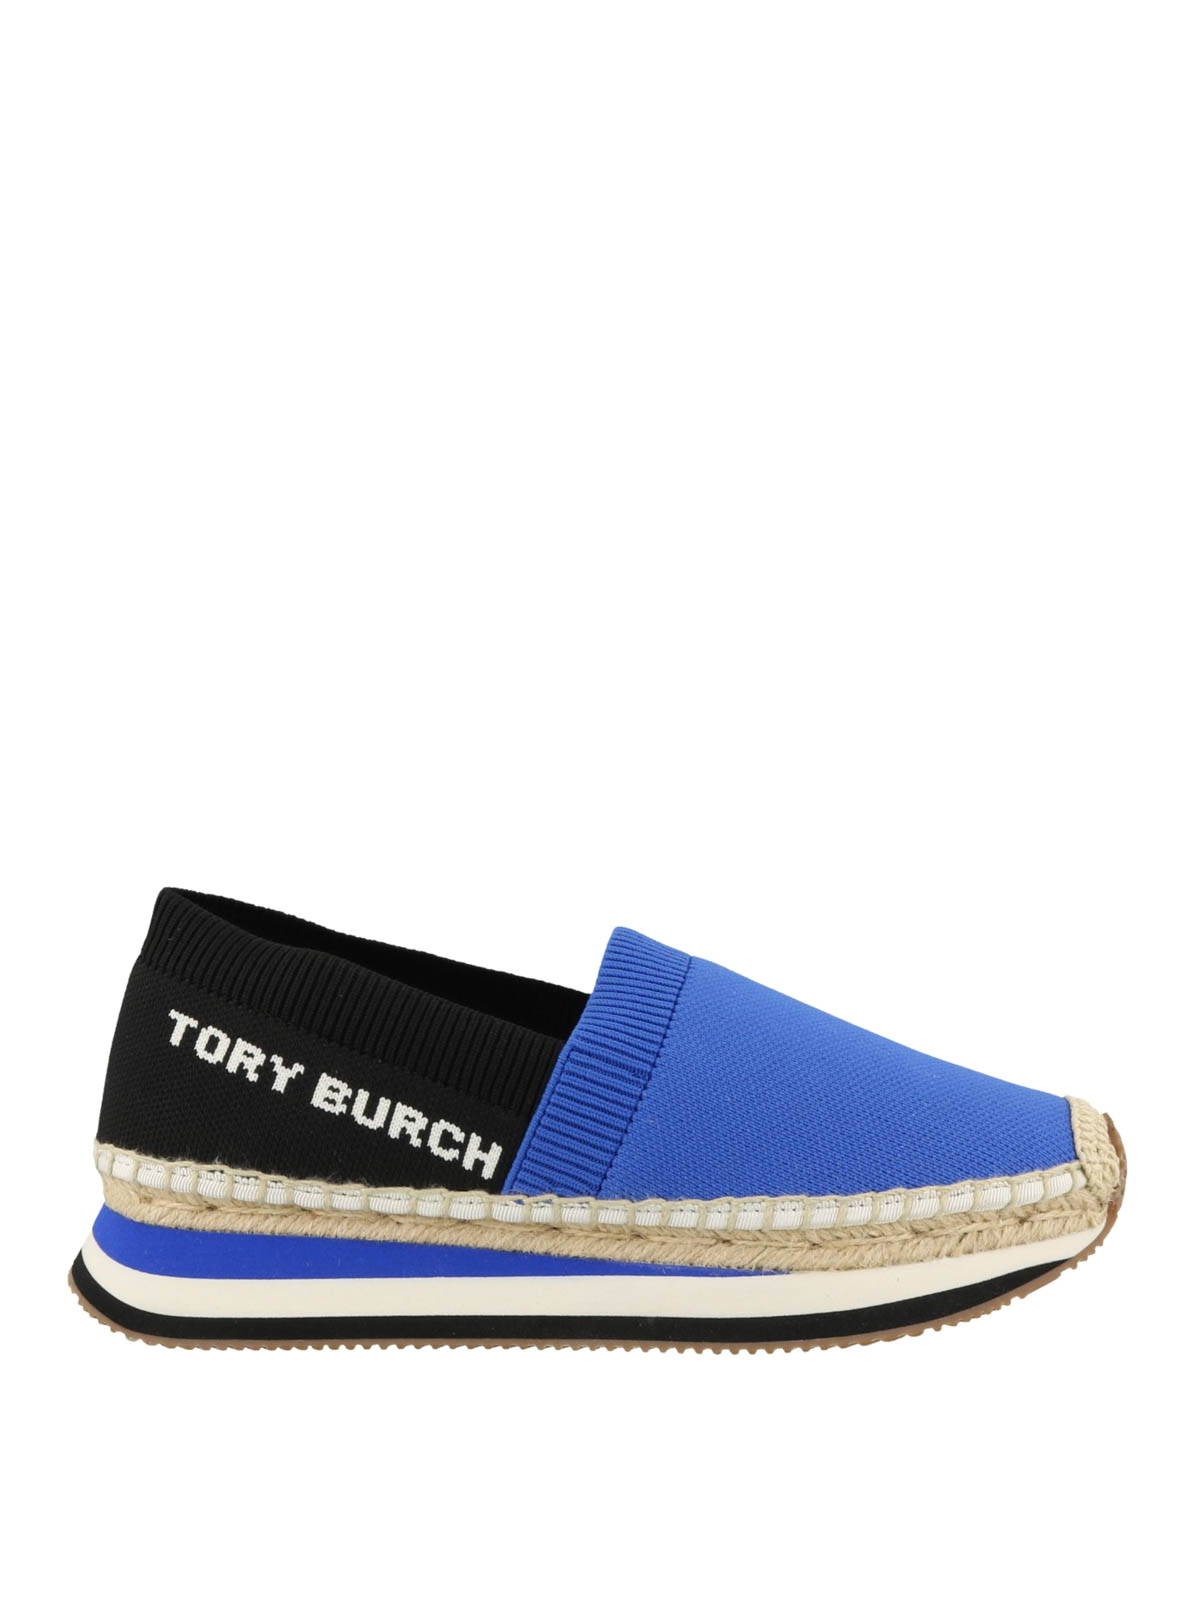 tory burch blue sneakers